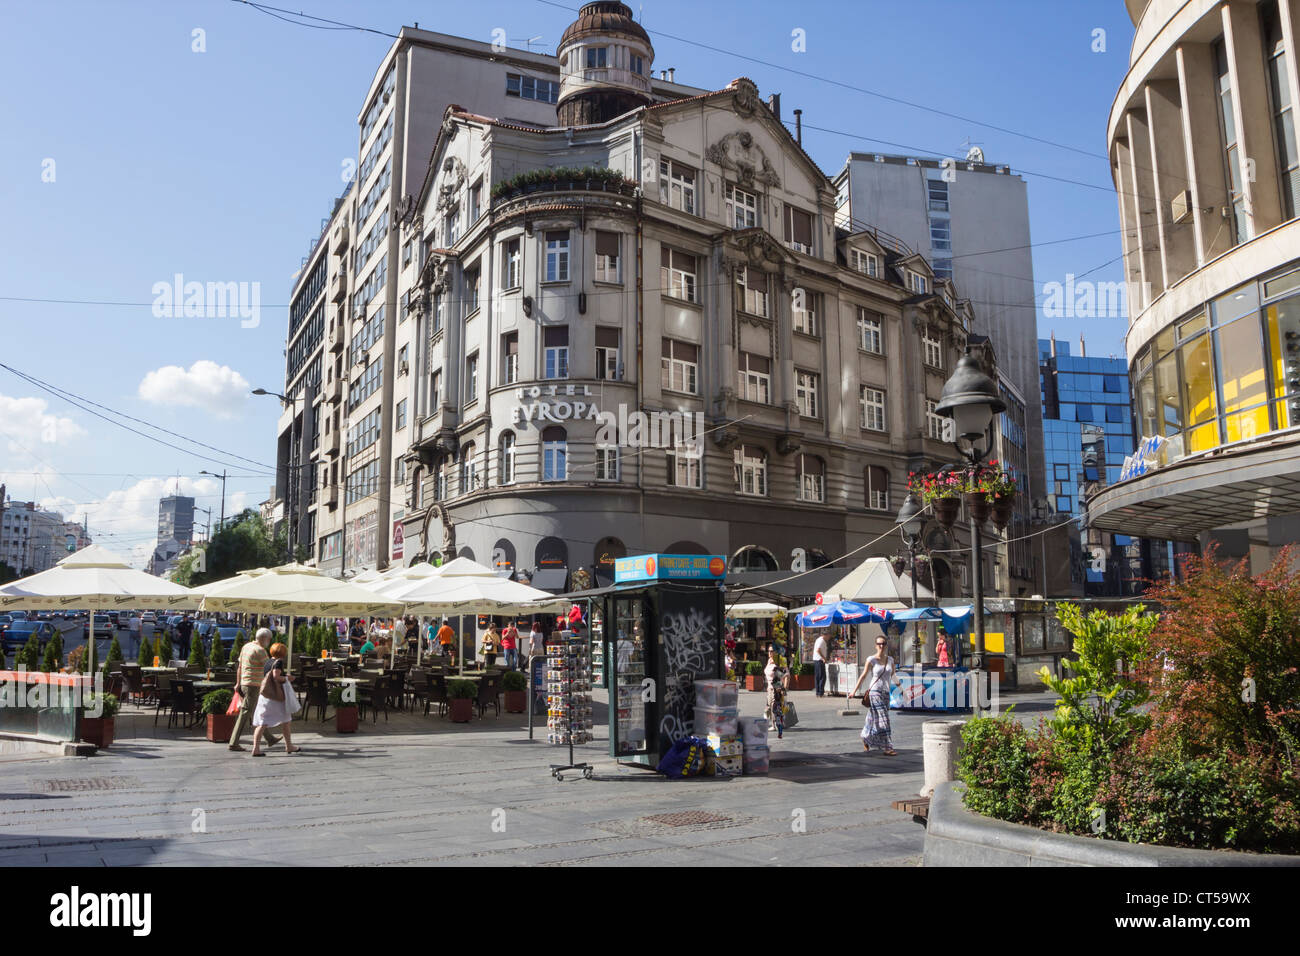 Belgrade city in Serbia. Hotel Europa in Terazije street Stock Photo